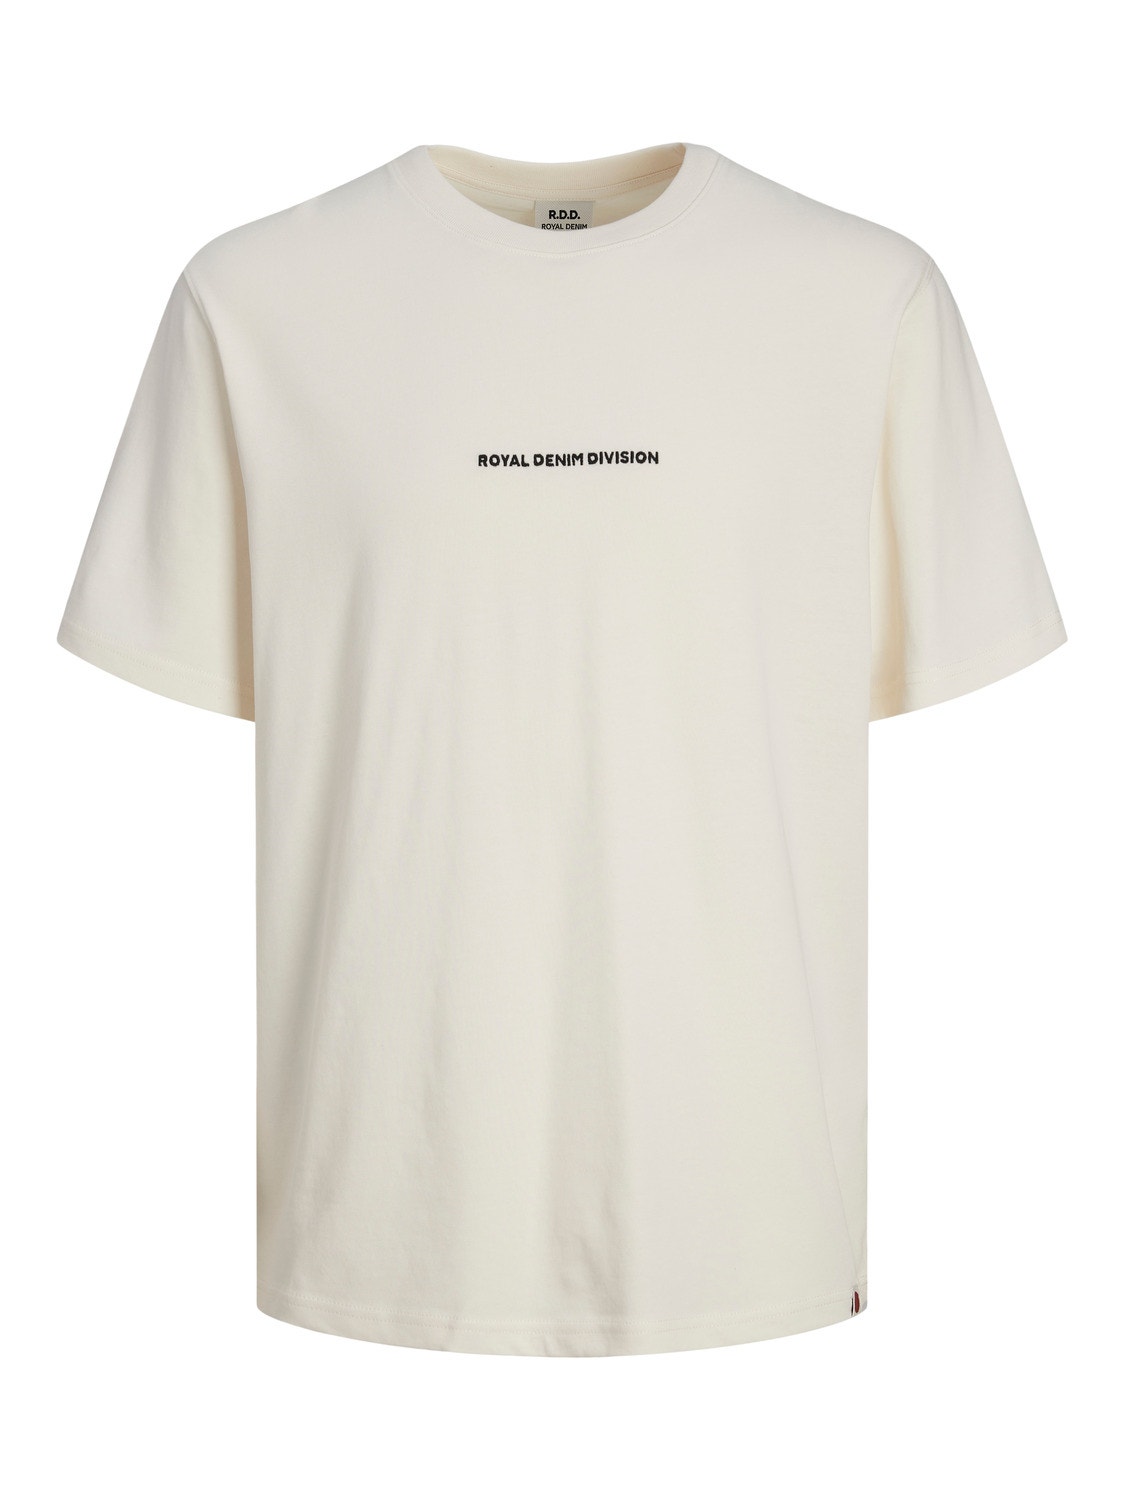 Jack & Jones RDD Printet Crew neck T-shirt -Egret - 12253392